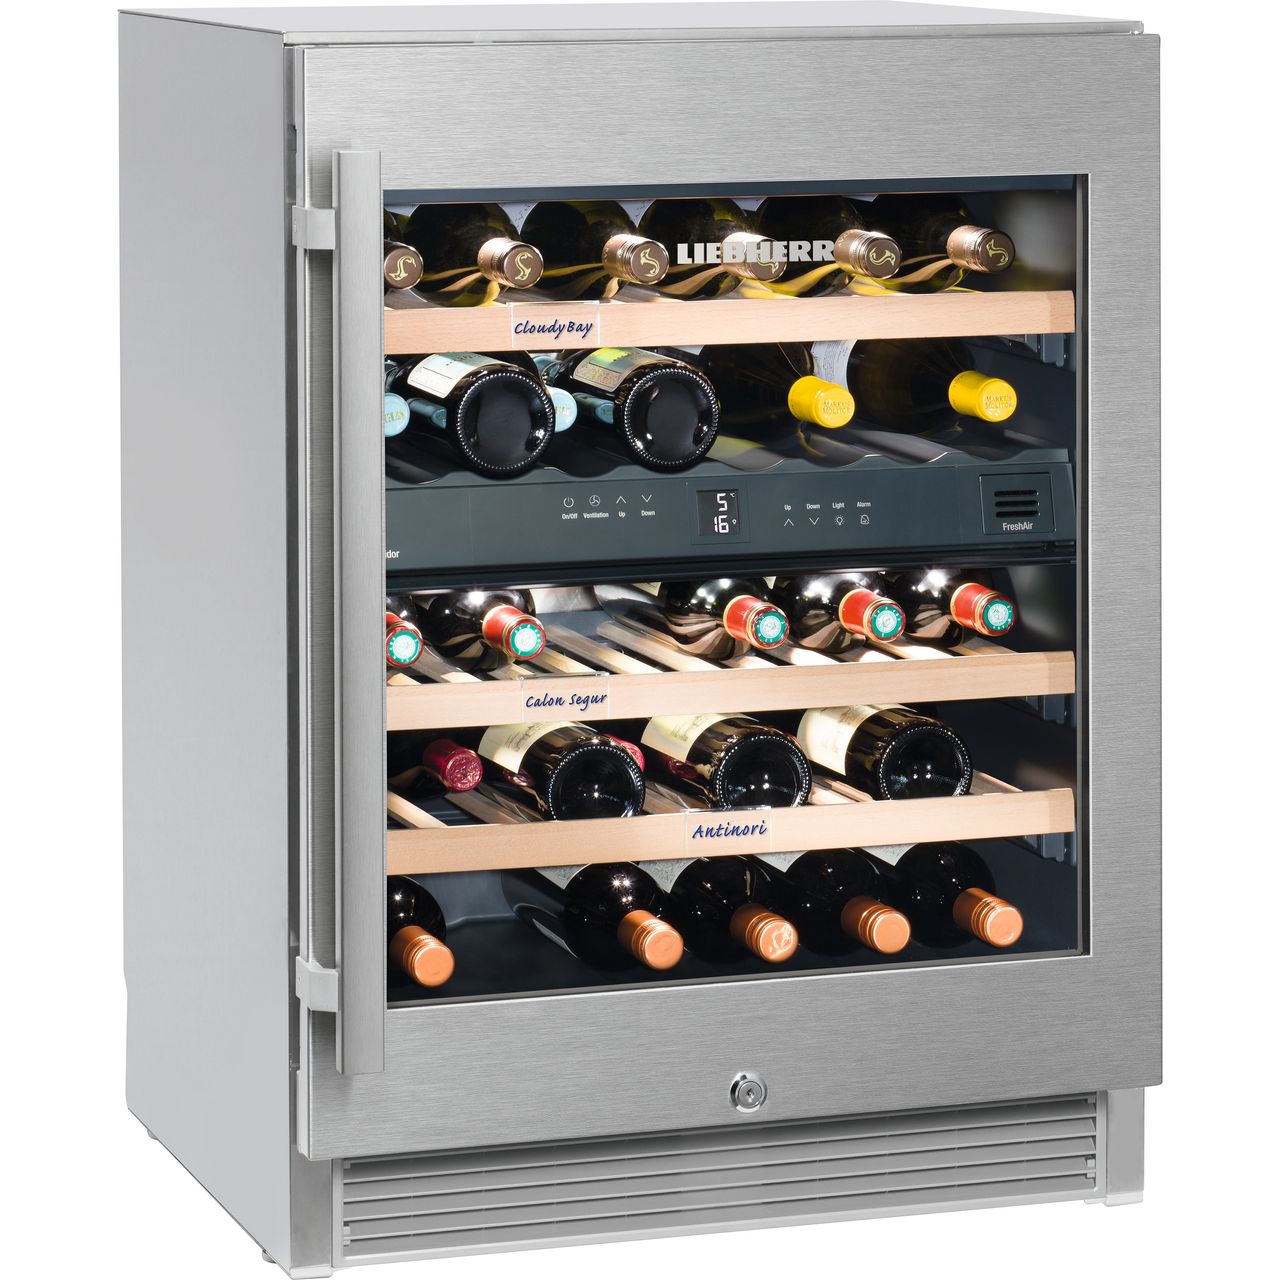 Liebherr WTes1672 Wine Cooler Review